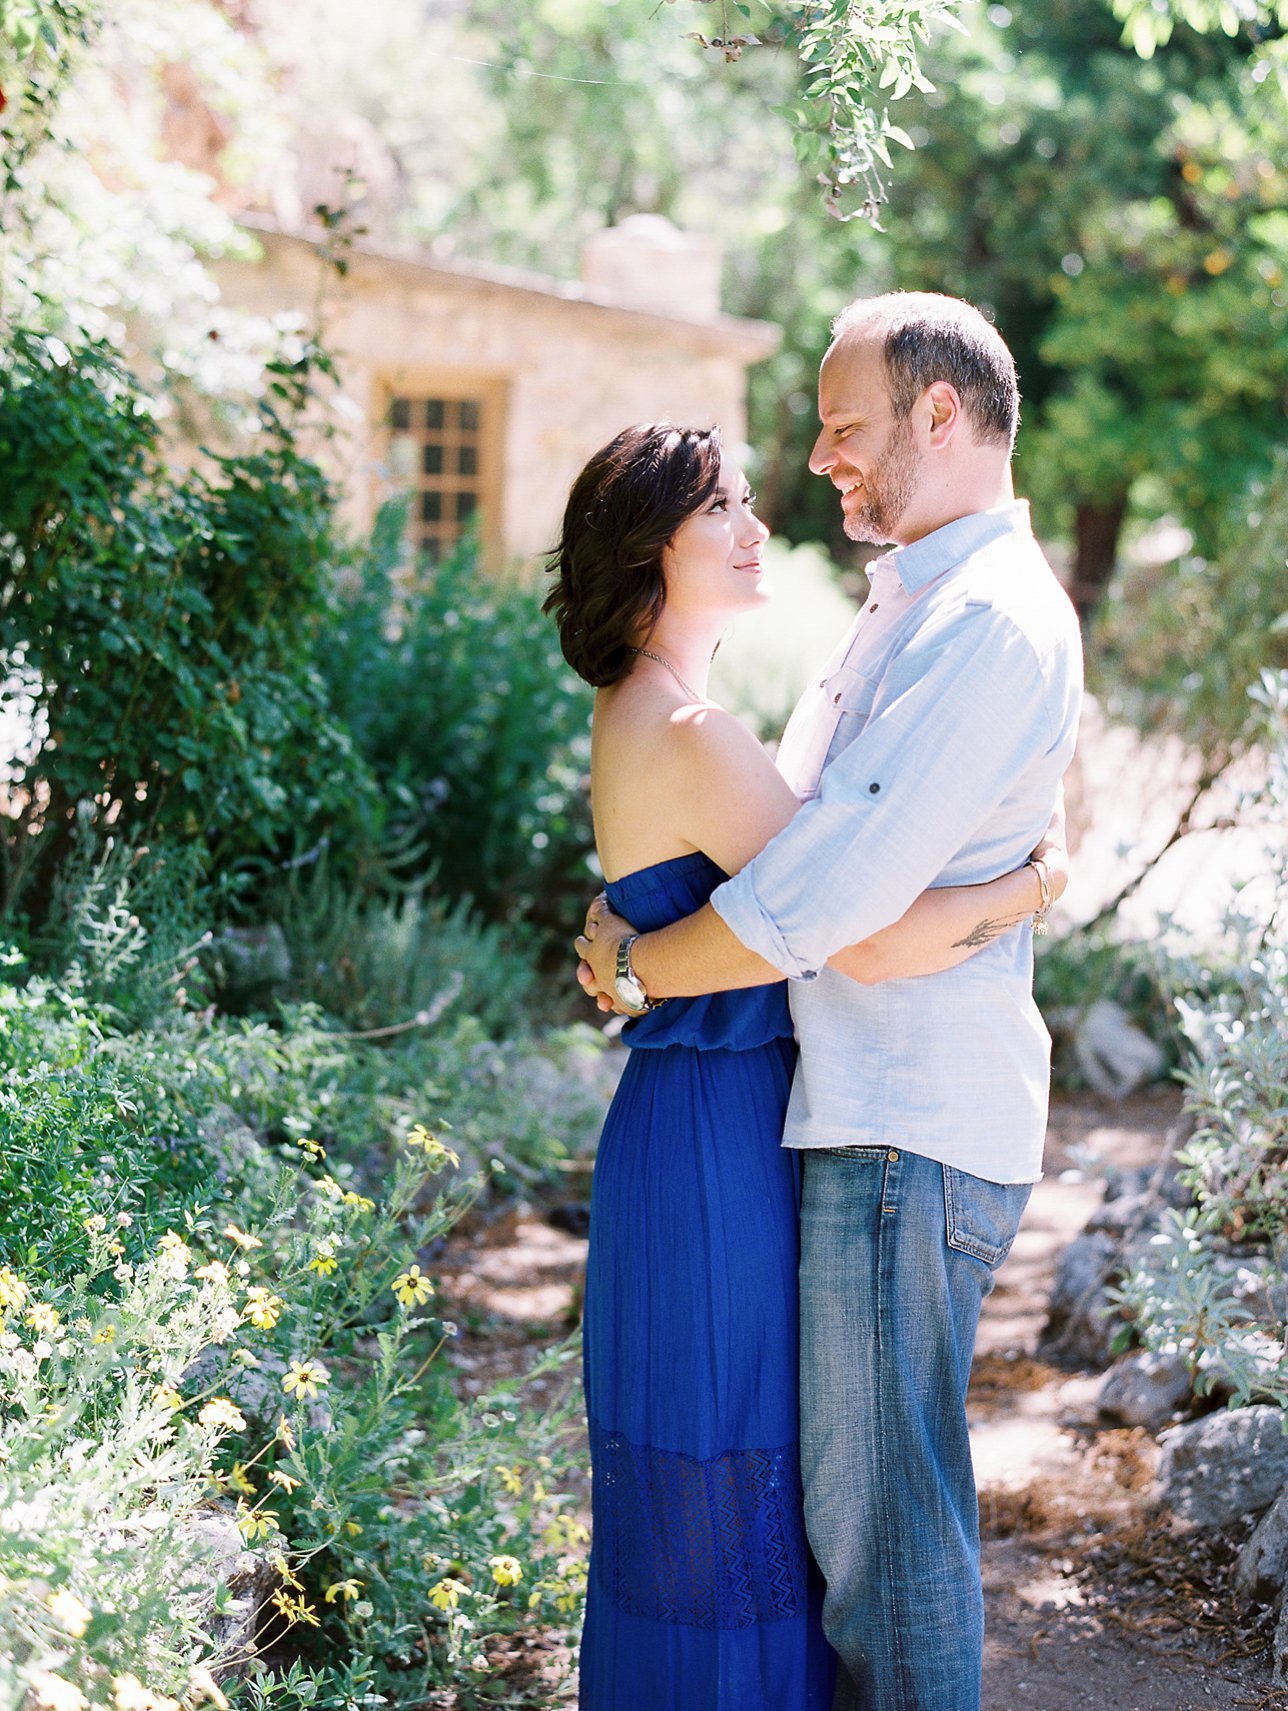 Boyce Thompson Arboretum engagement photos - Scottsdale Wedding Photographer | Rachel Solomon Photography_6634